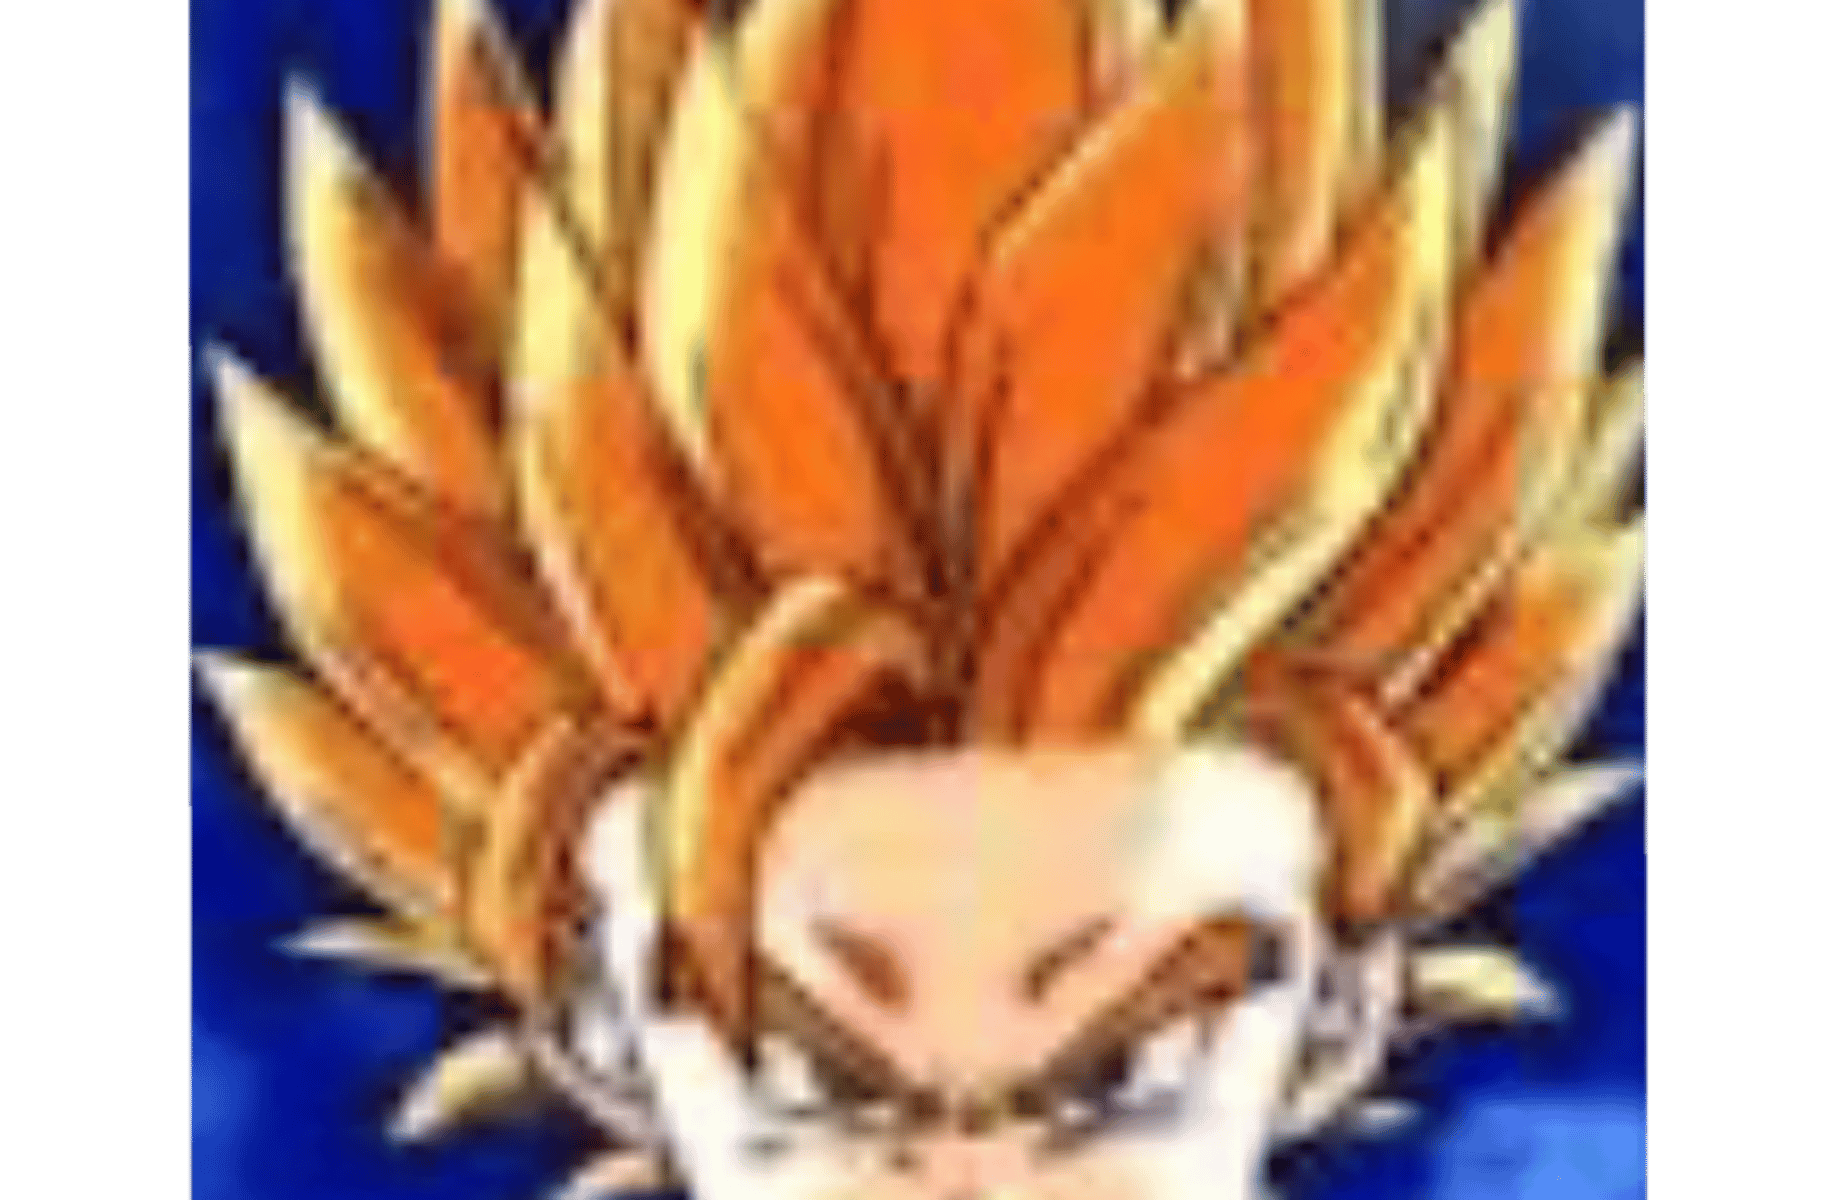 Goku super saiyan 2